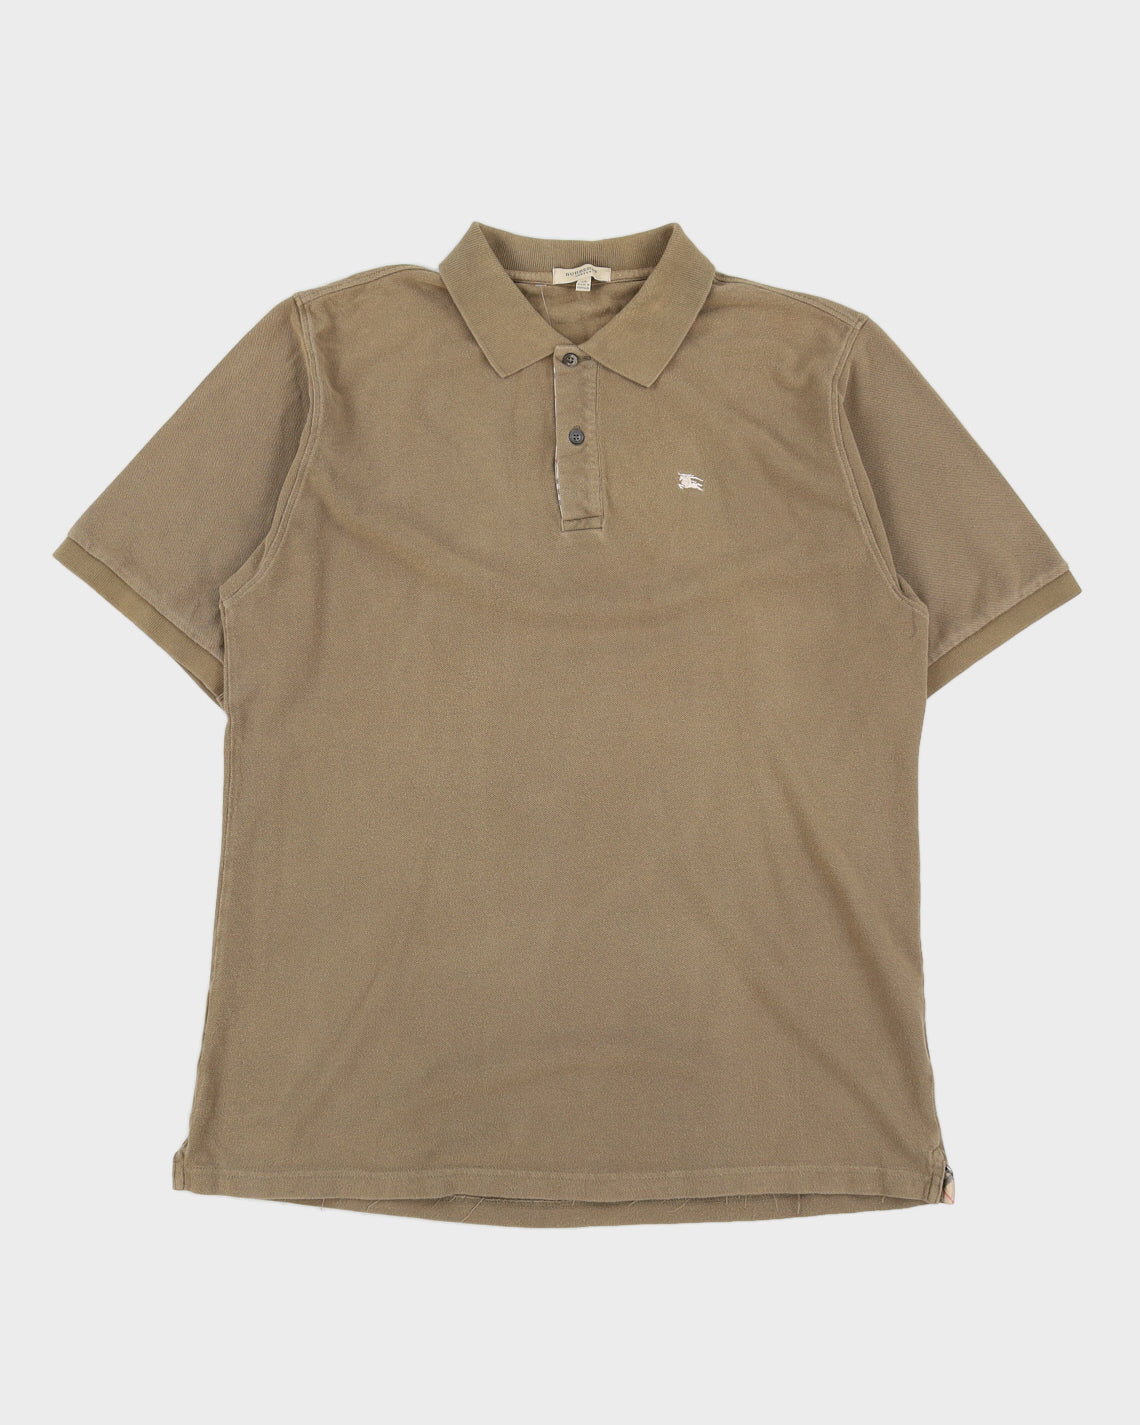 Burberry London Brown Polo Shirt - XL